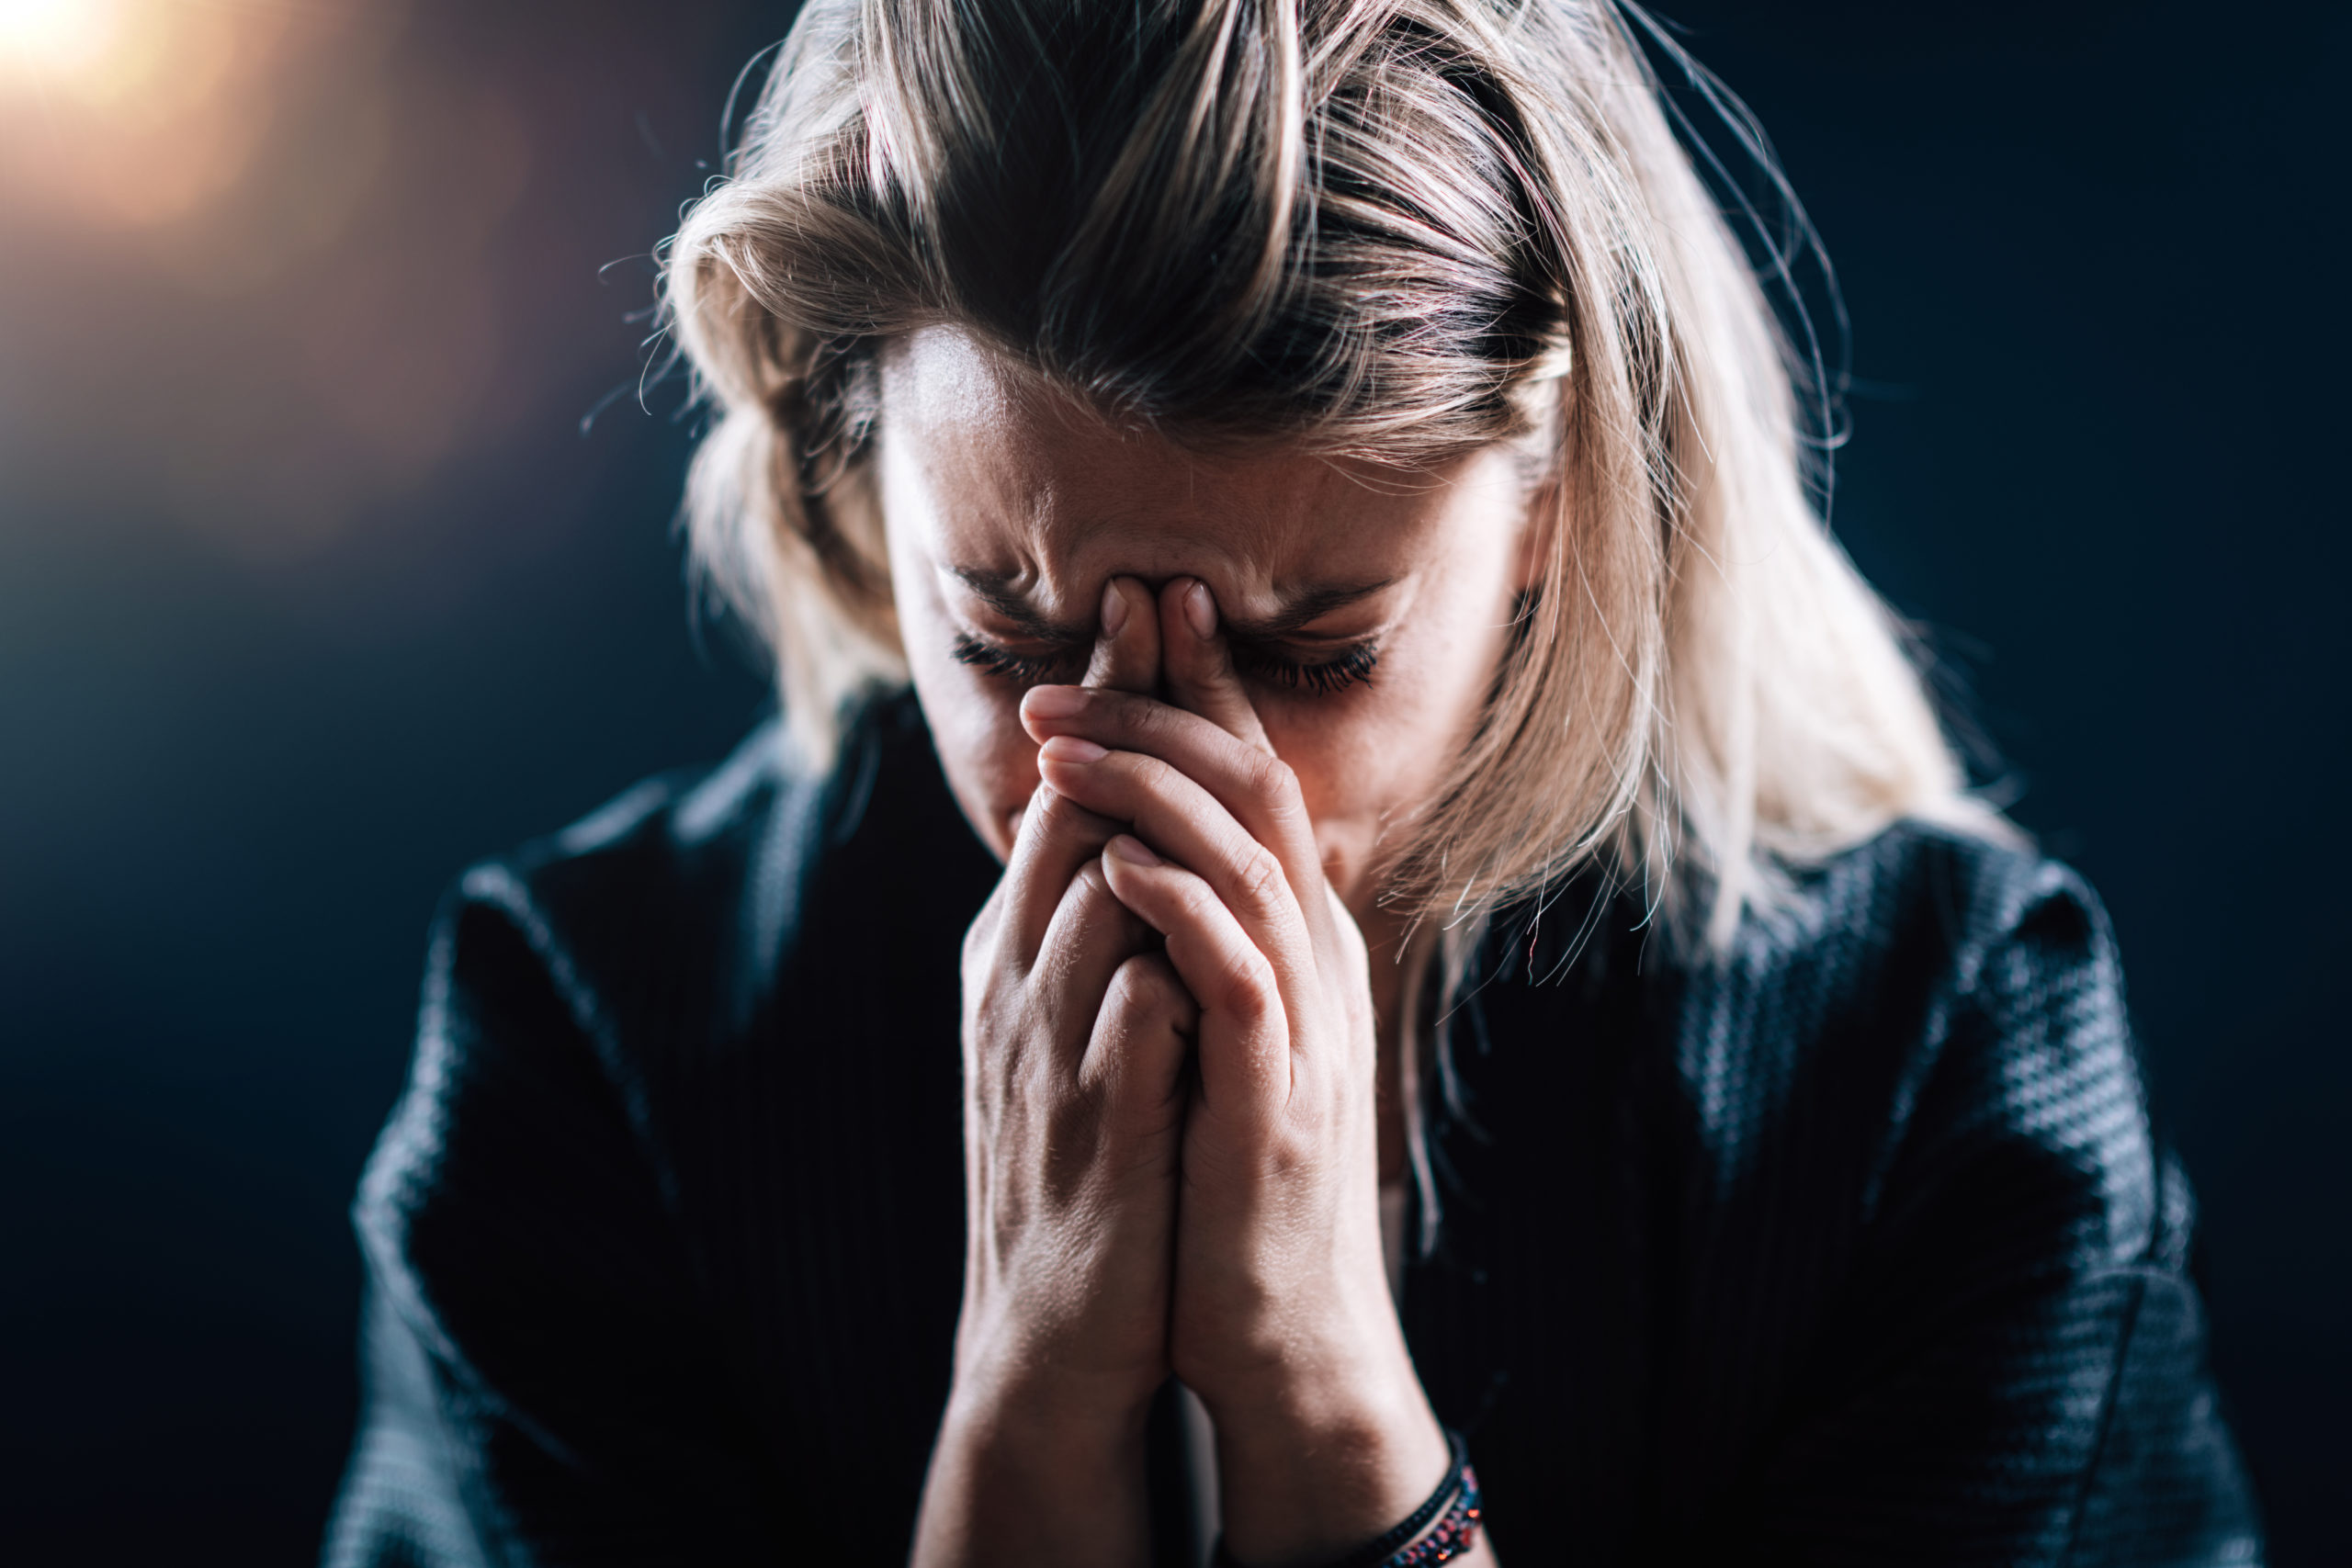 Christian wife facing domestic abuse